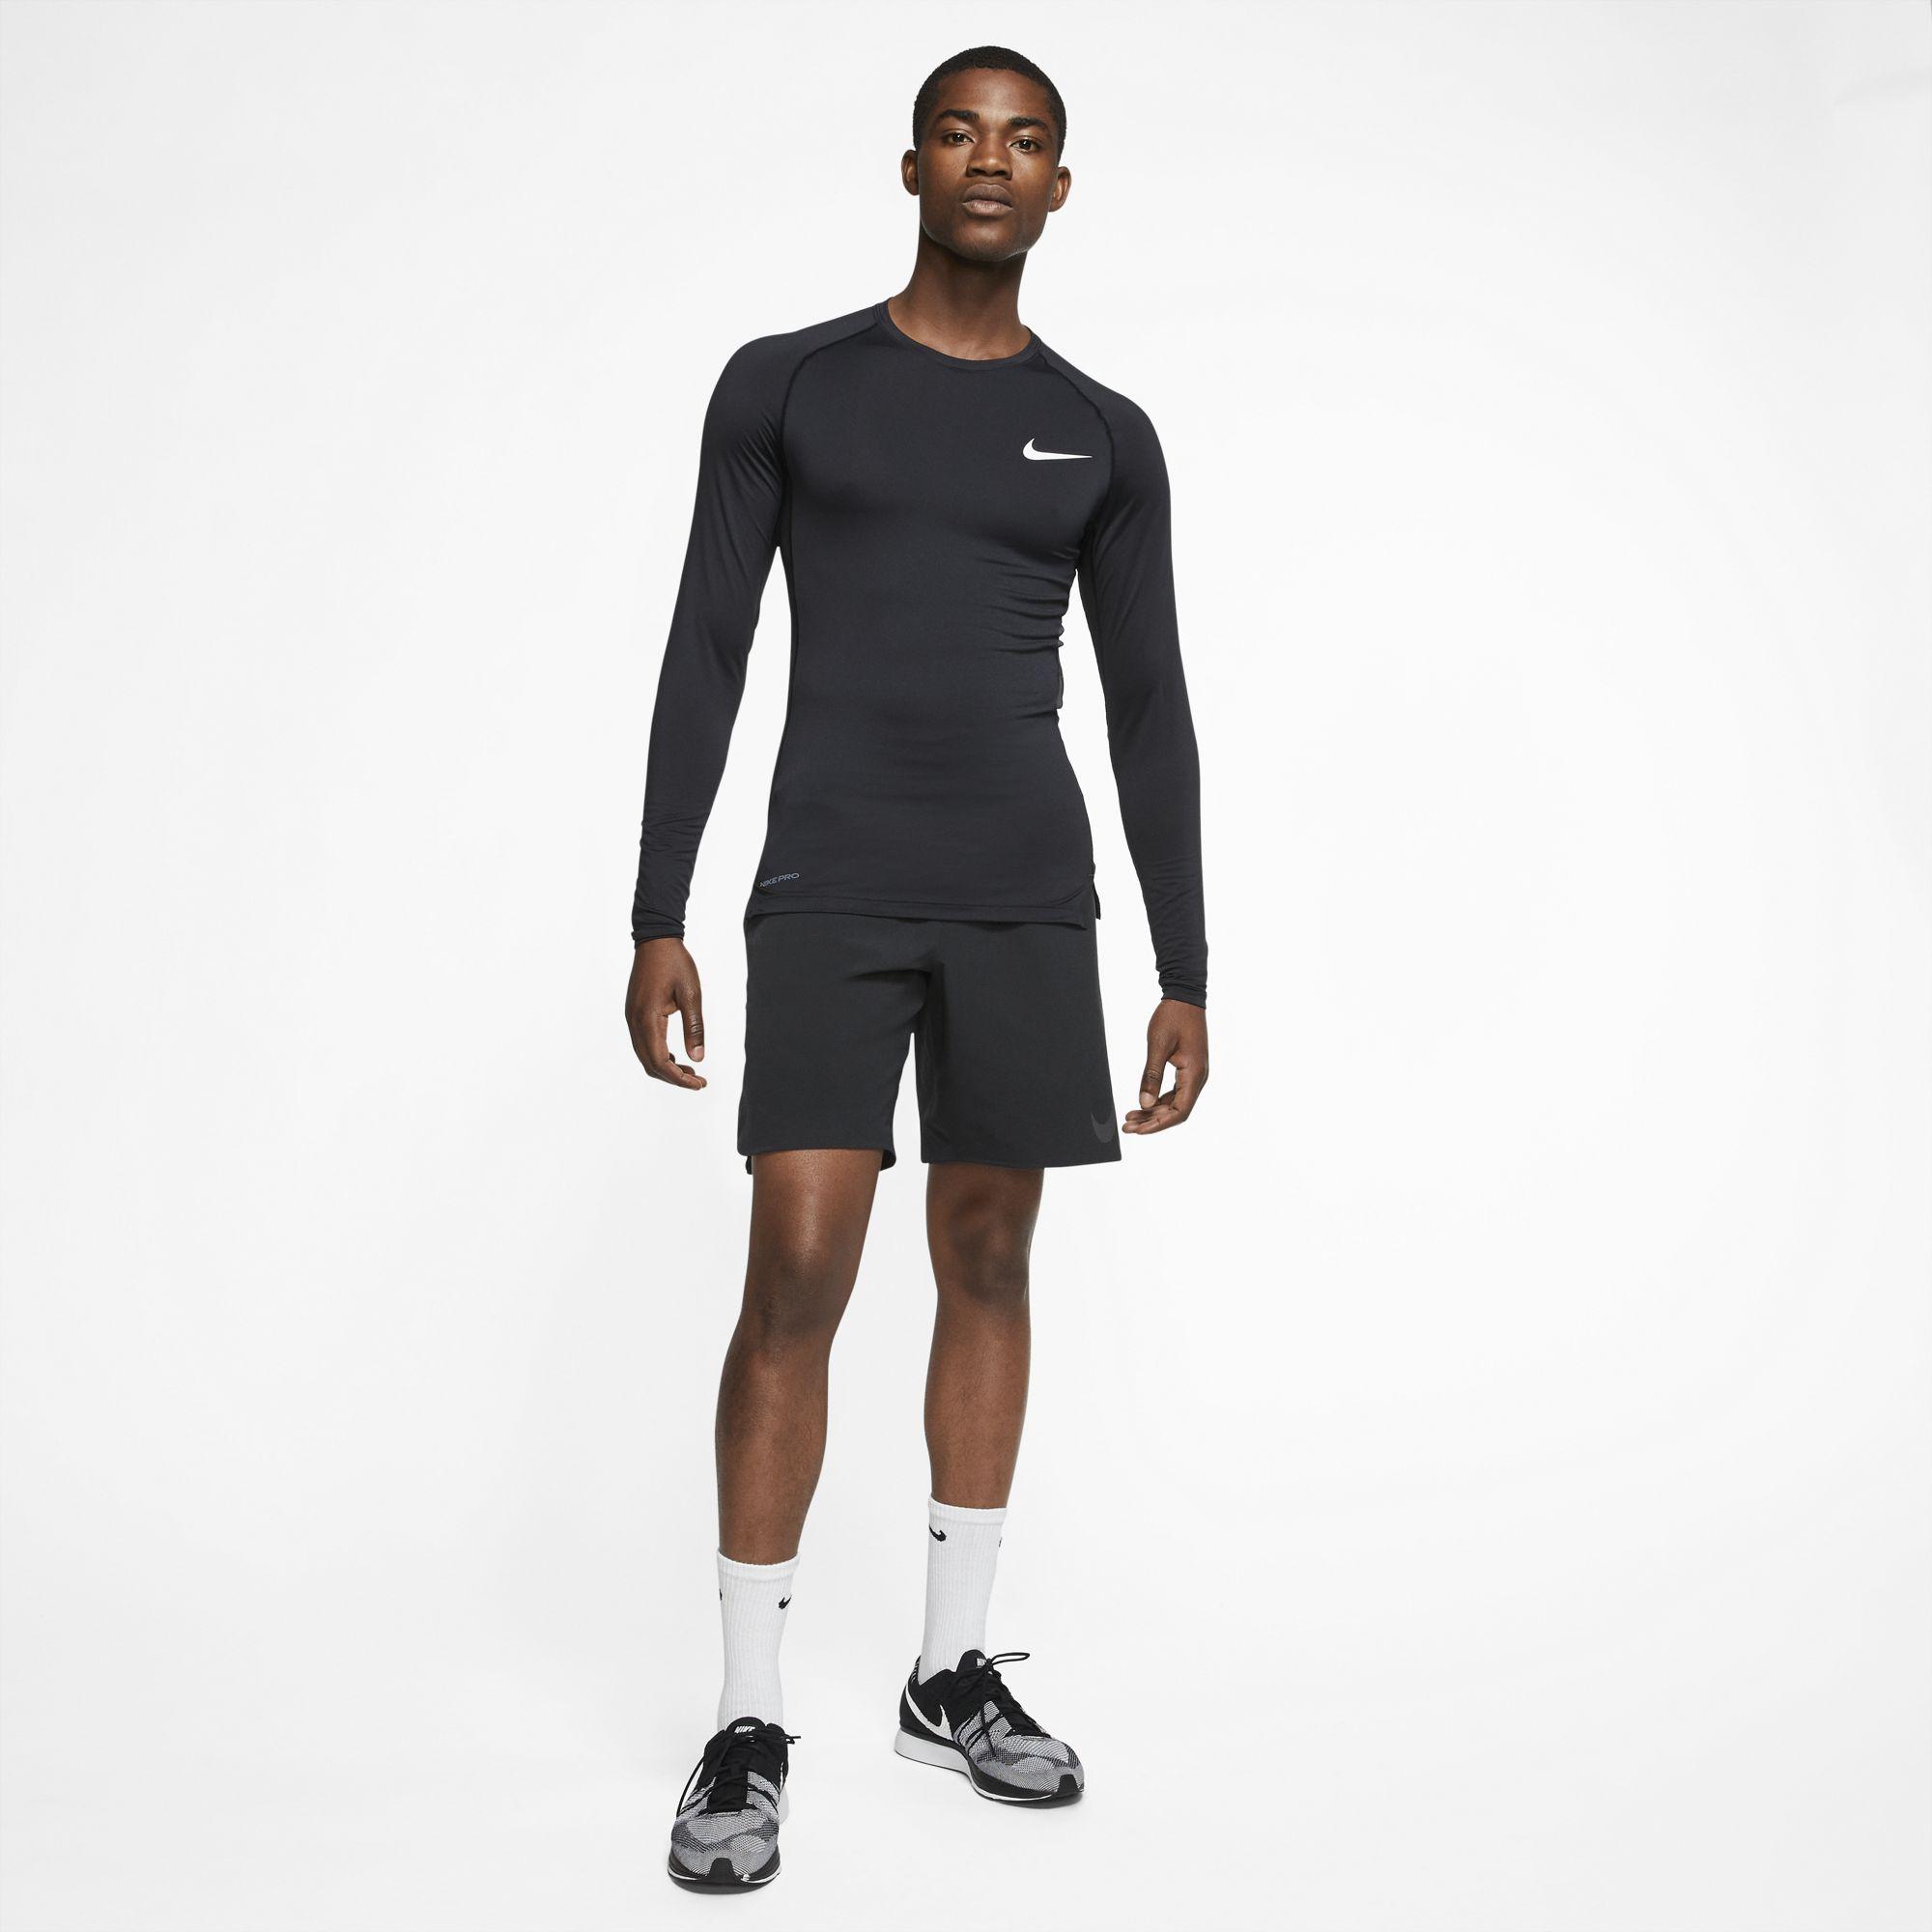 Nike Mens Pro Long Sleeve Top - Black/White - Tennisnuts.com